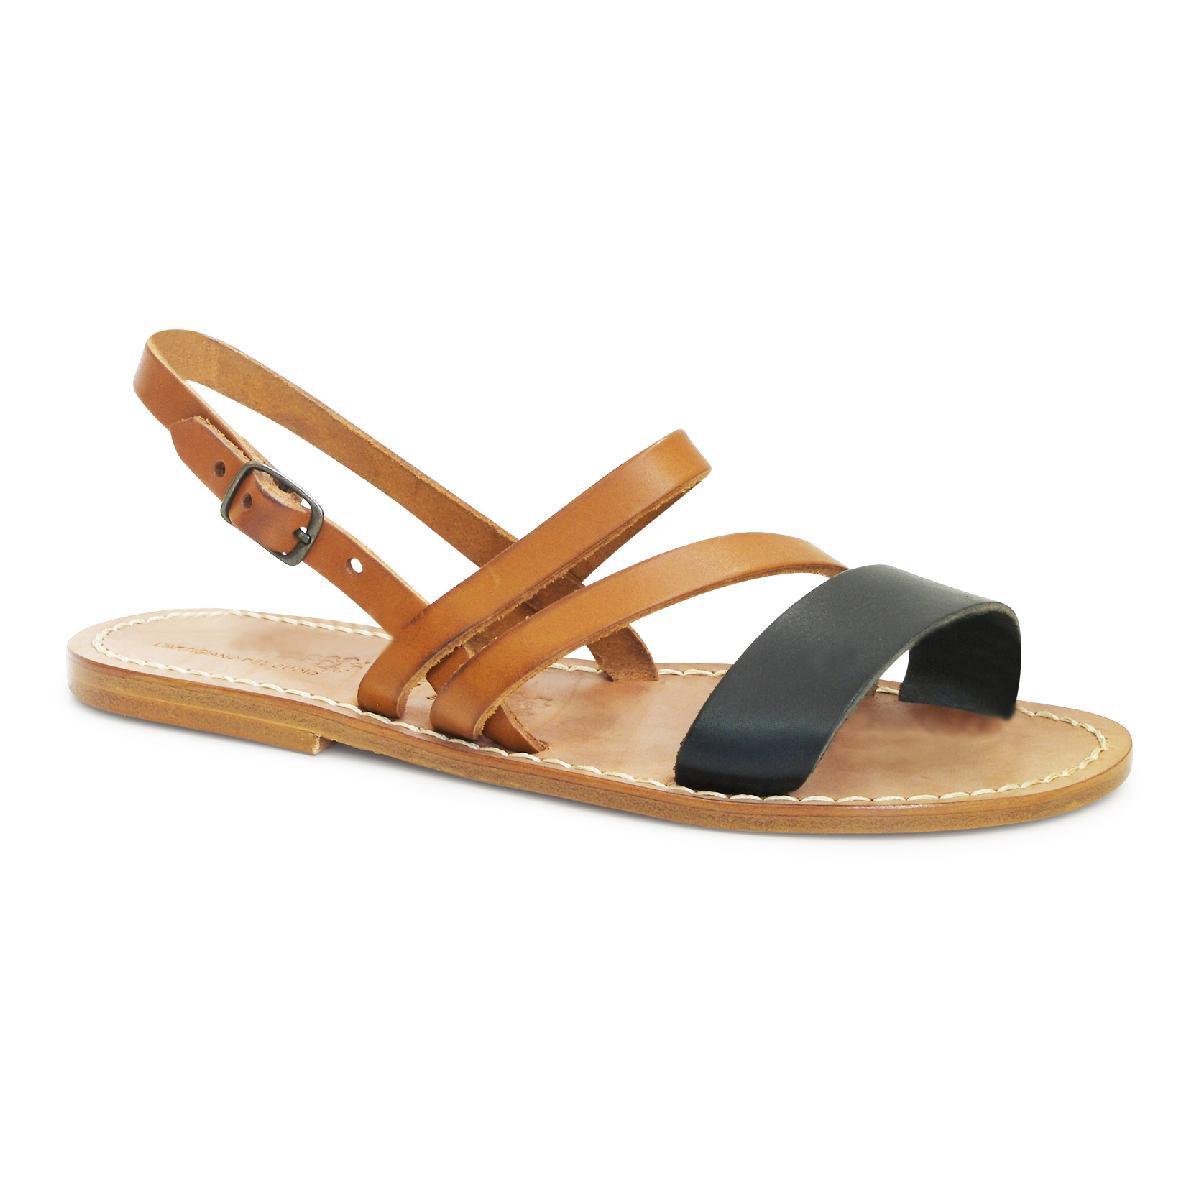 Women's flat sandals handmade in tan 